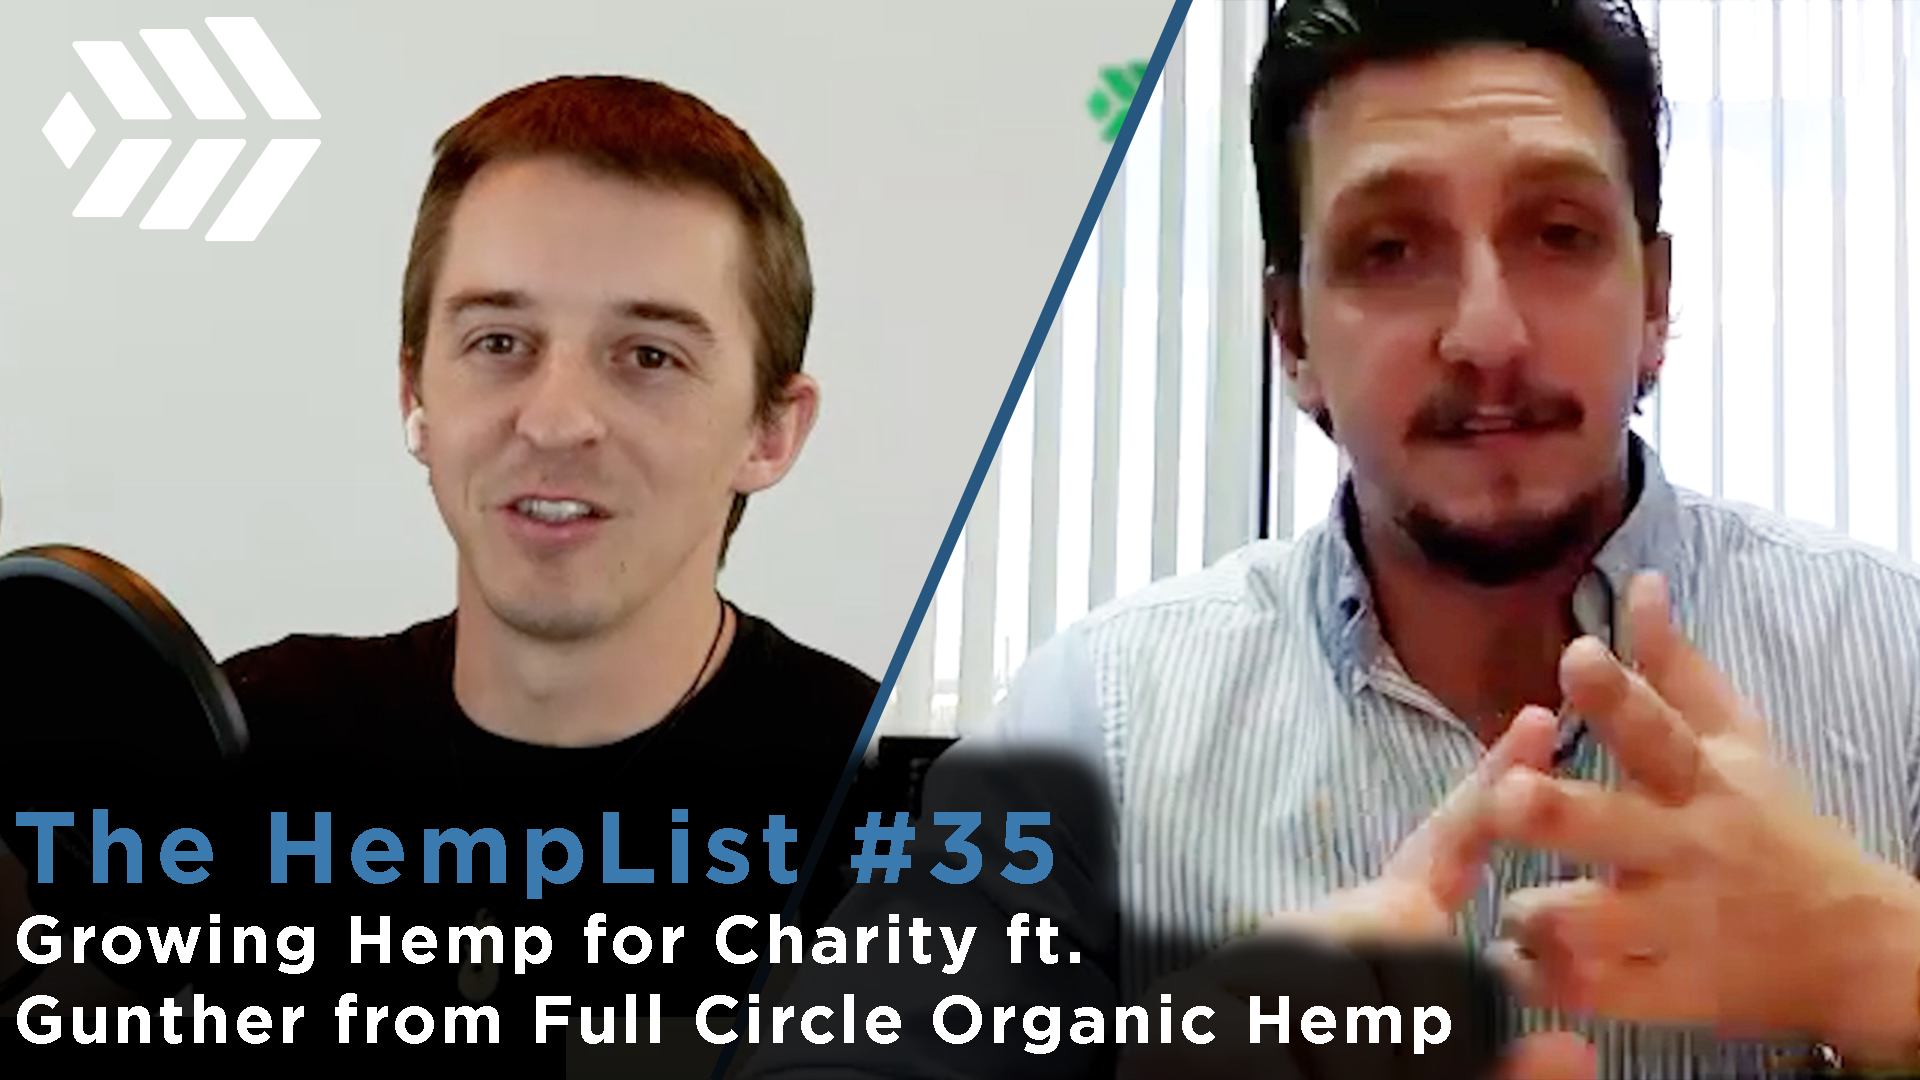 The HempList #35: Growing Hemp for Charity w/ Full Circle Organic Hemp in New York